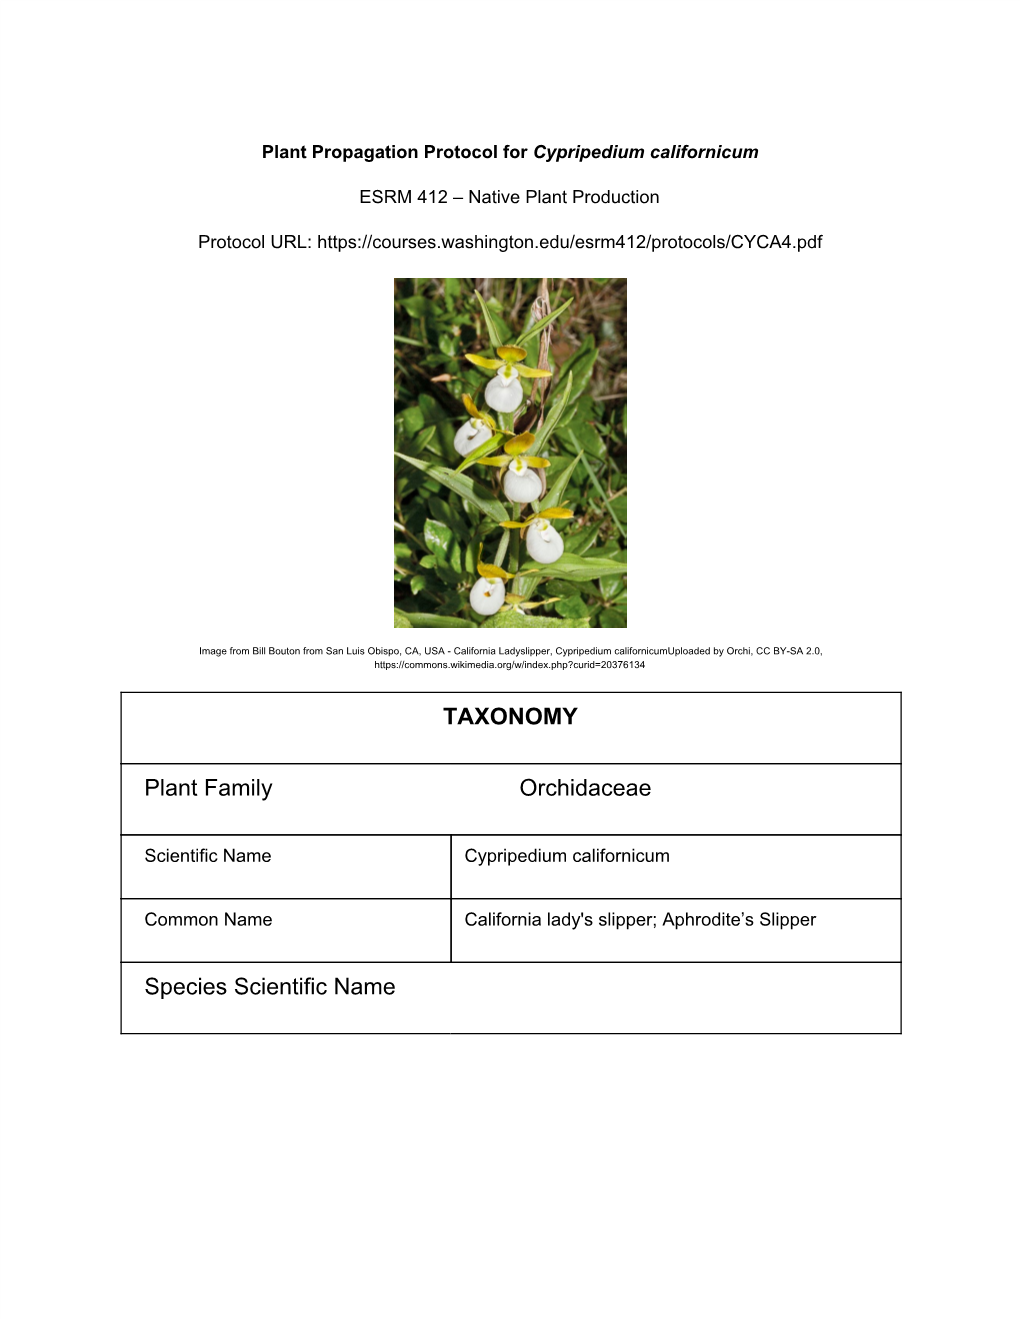 TAXONOMY Plant Family Orchidaceae Species Scientific Name